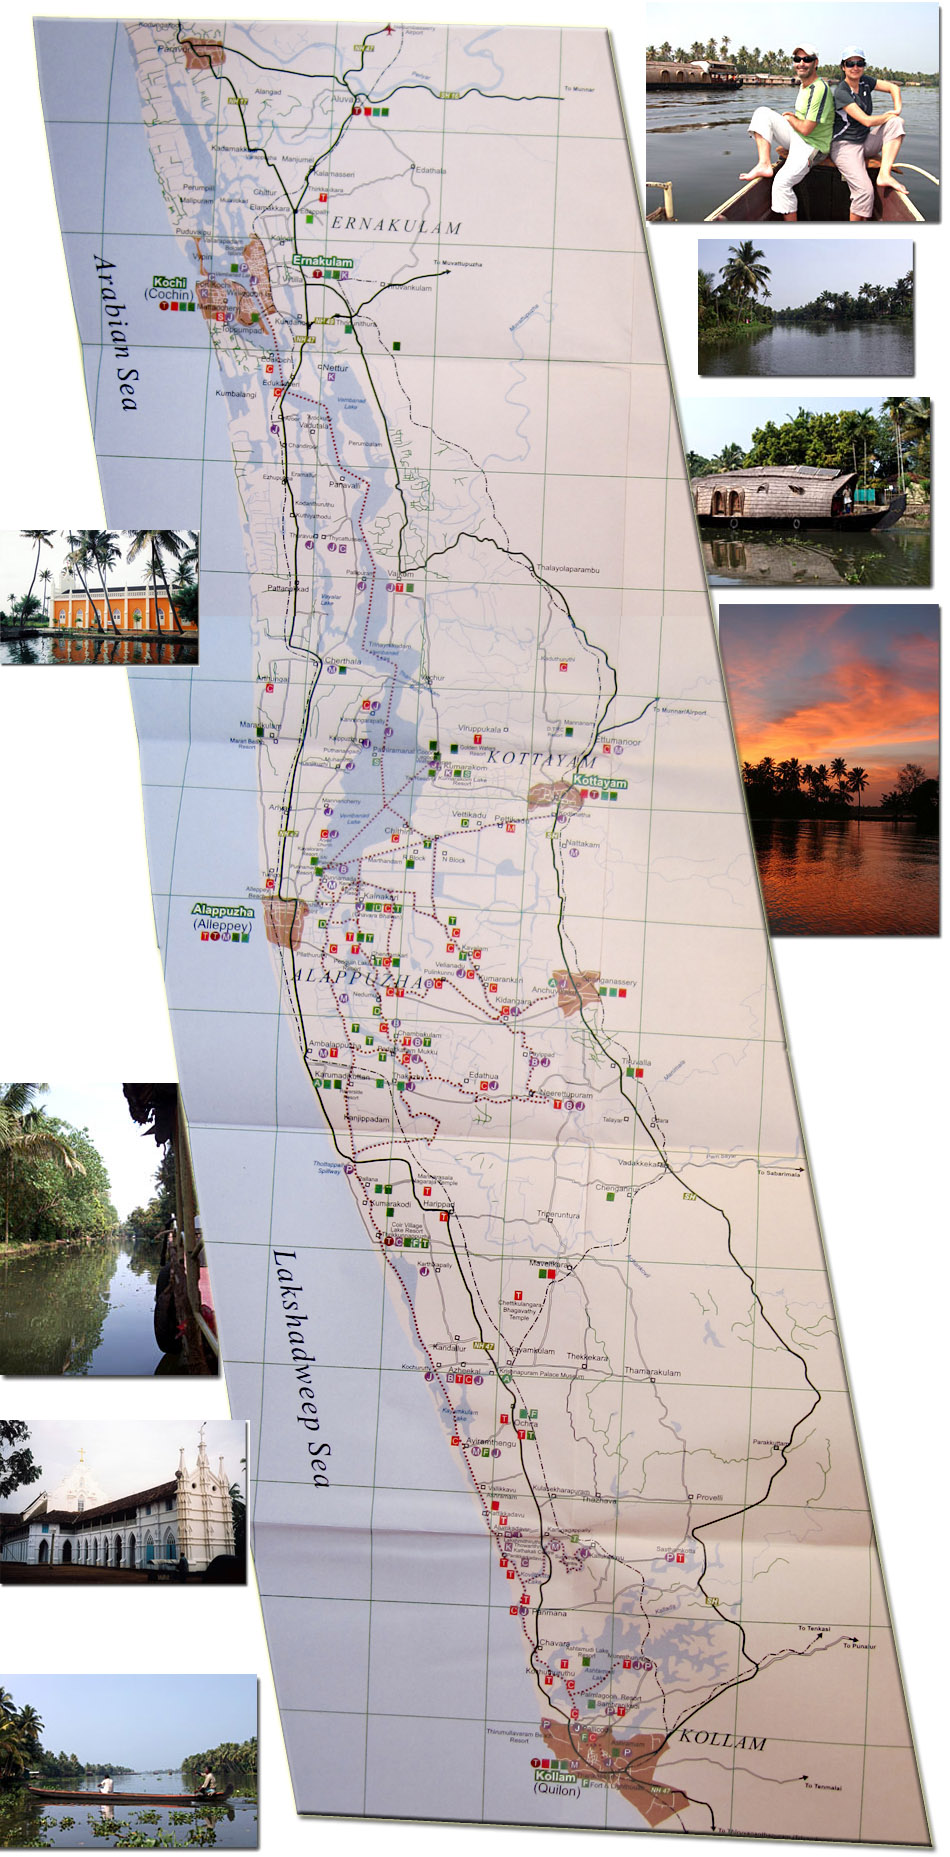 mapa de los backwaters de kerala